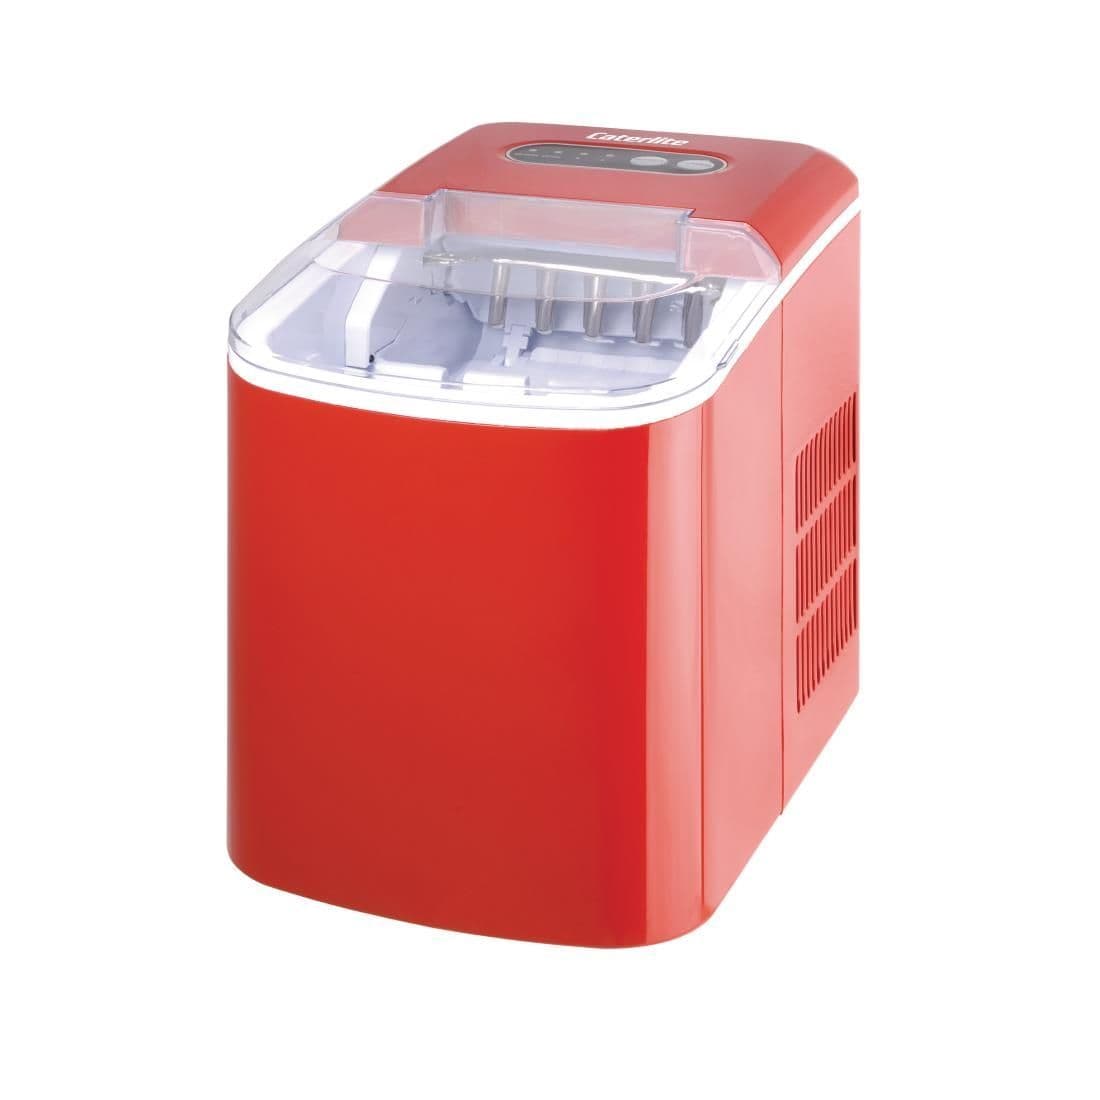 DA257 Caterlite Countertop Manual Fill Ice Machine Red JD Catering Equipment Solutions Ltd